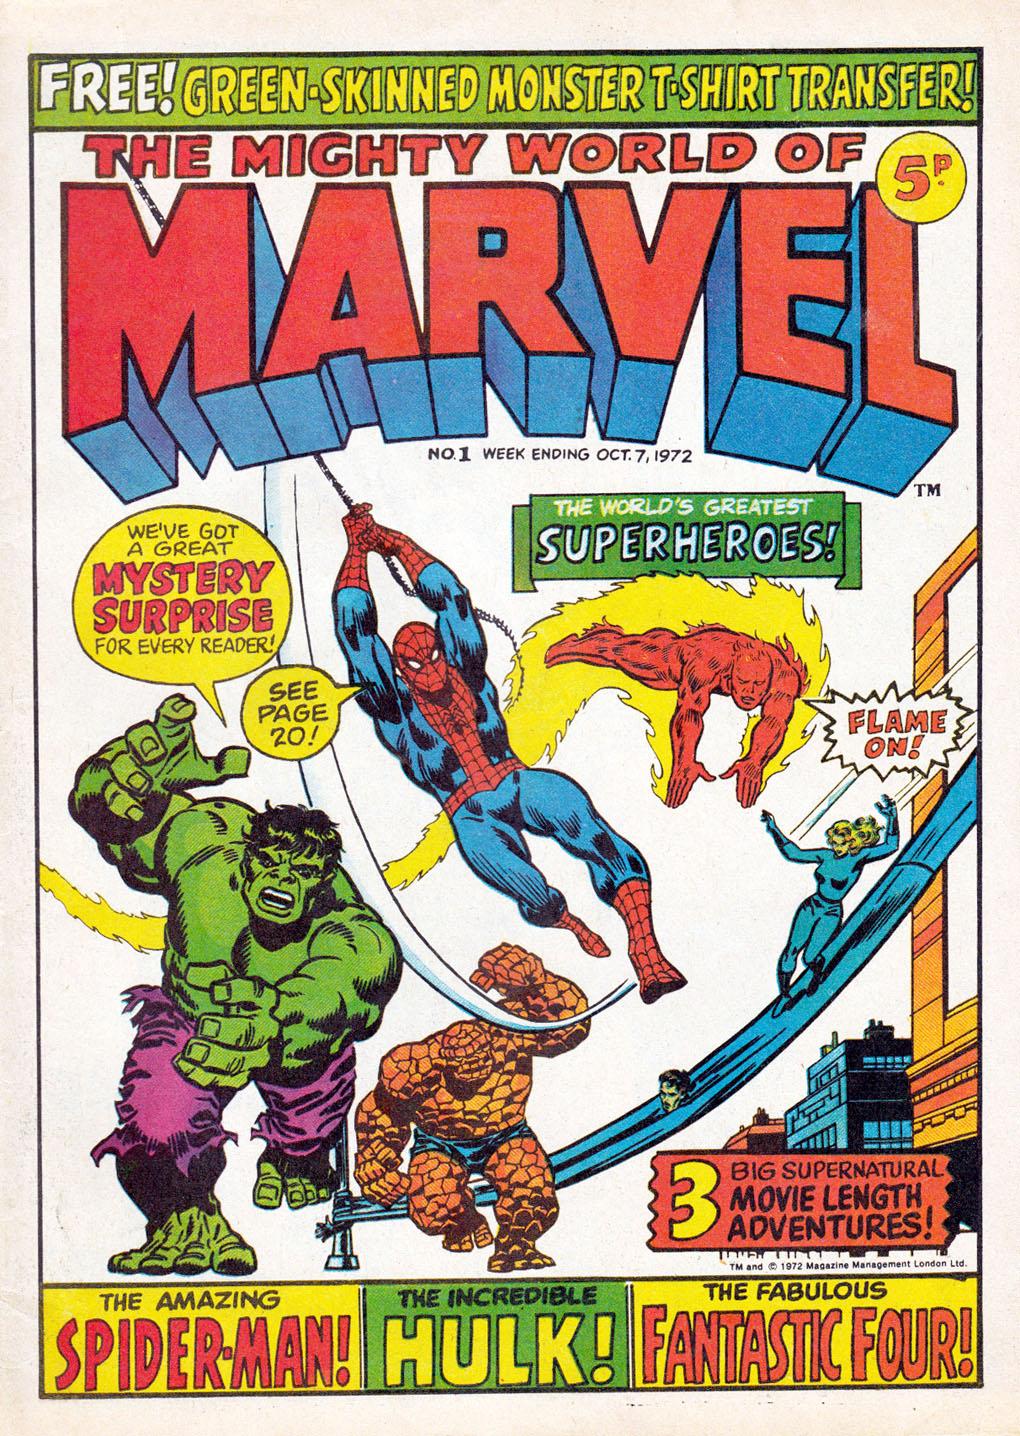 Mighty World of Marvel Vol. 1 #1